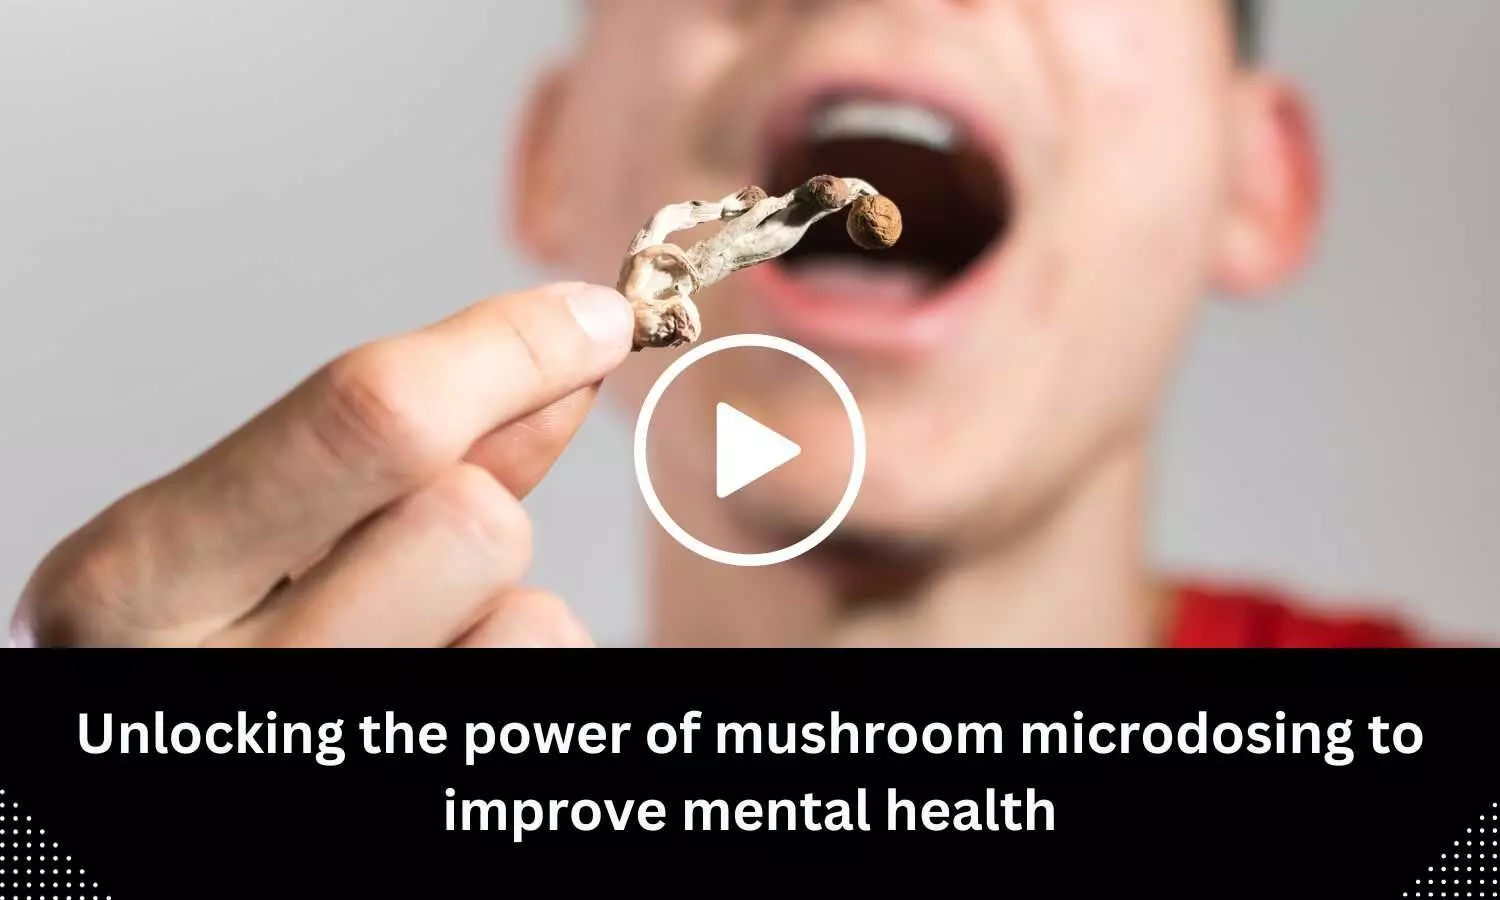 Unlocking the power of mushroom microdosing to improve mental health